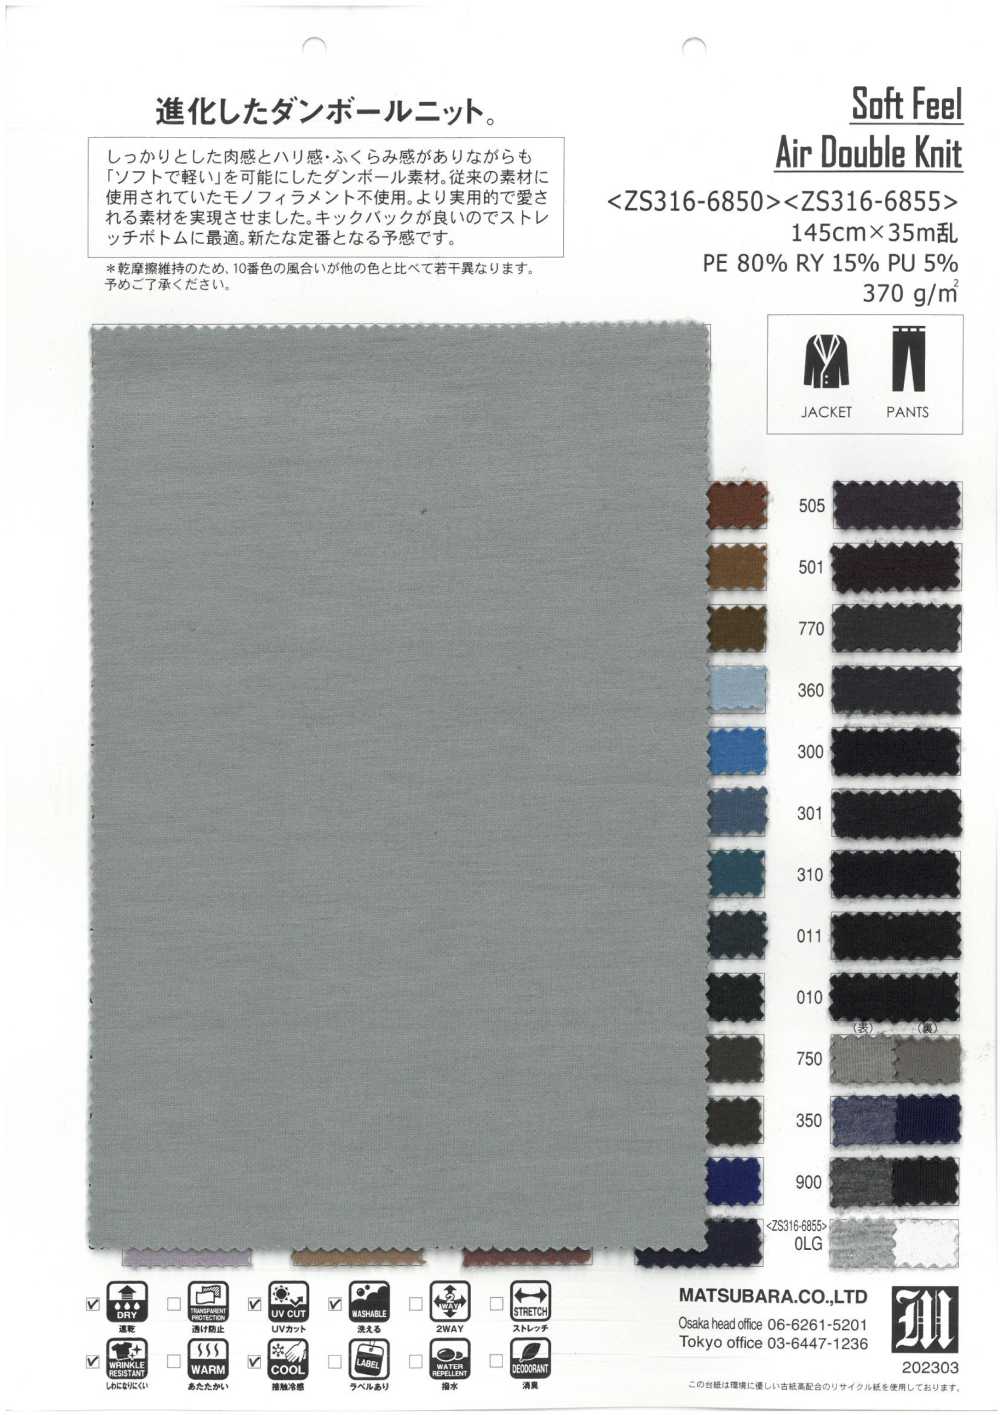 ZS316-6855 Soft Feel Air Double Knit[Textile / Fabric] Matsubara